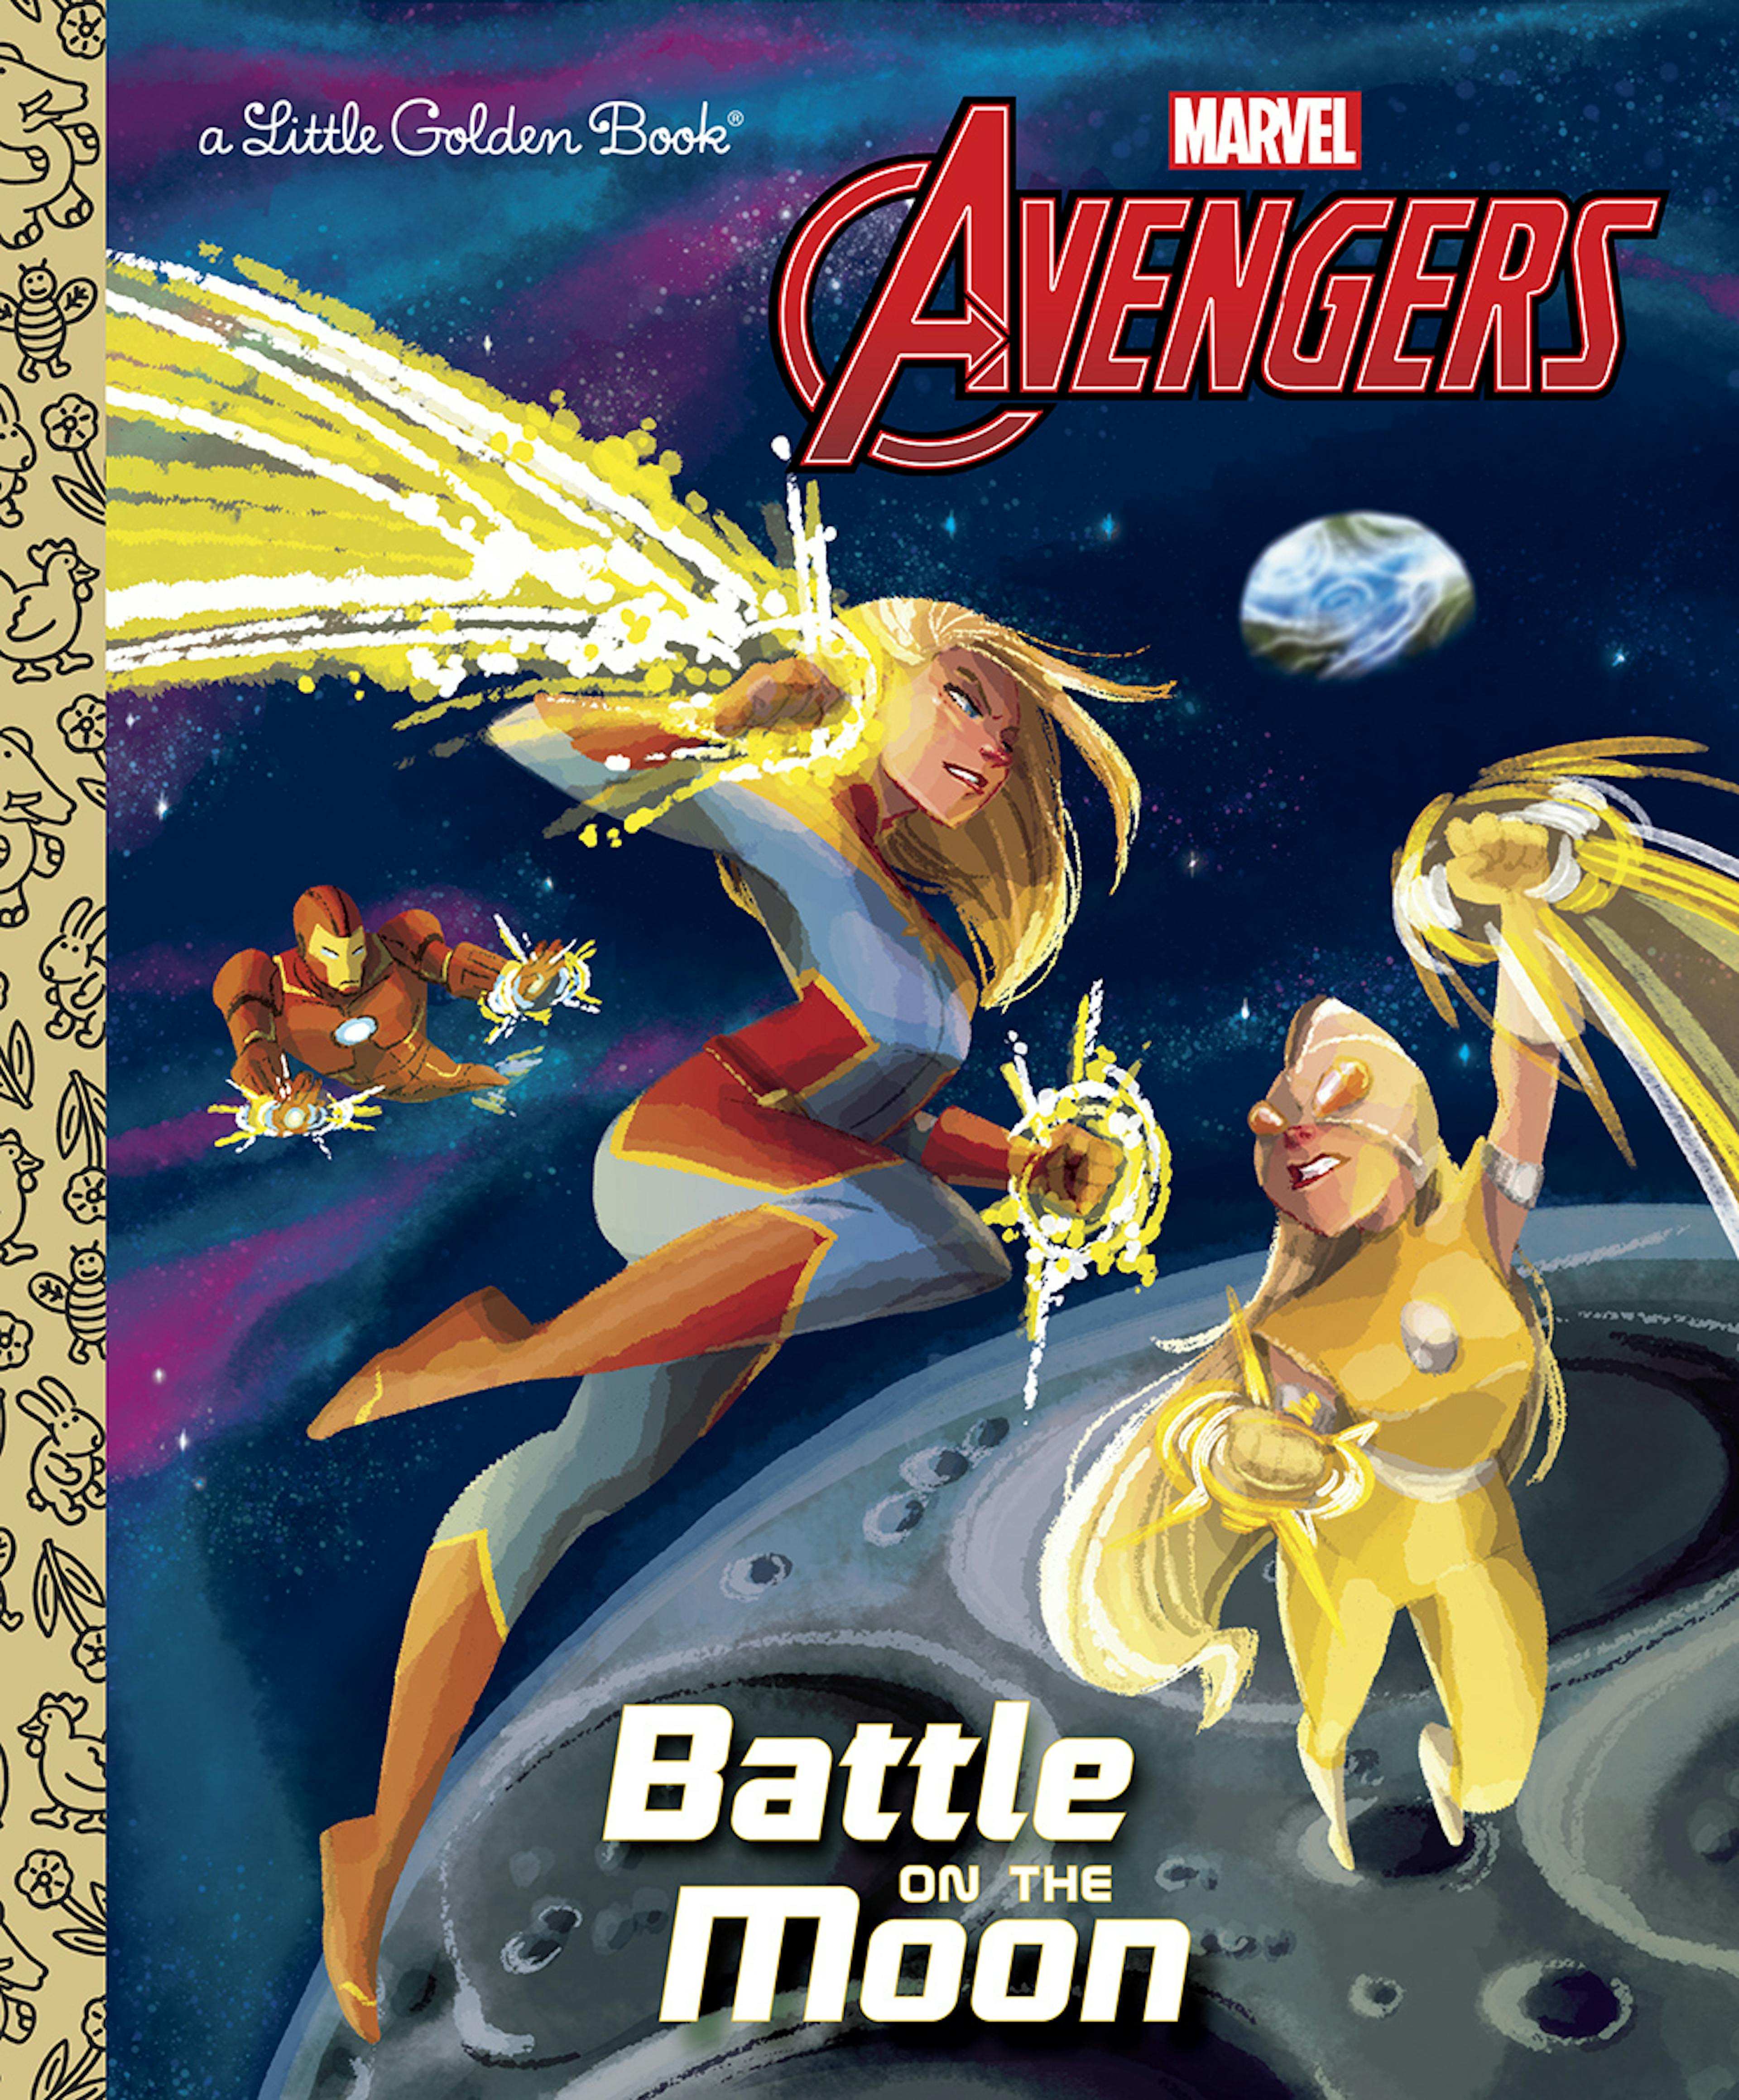 An Avengers book cover